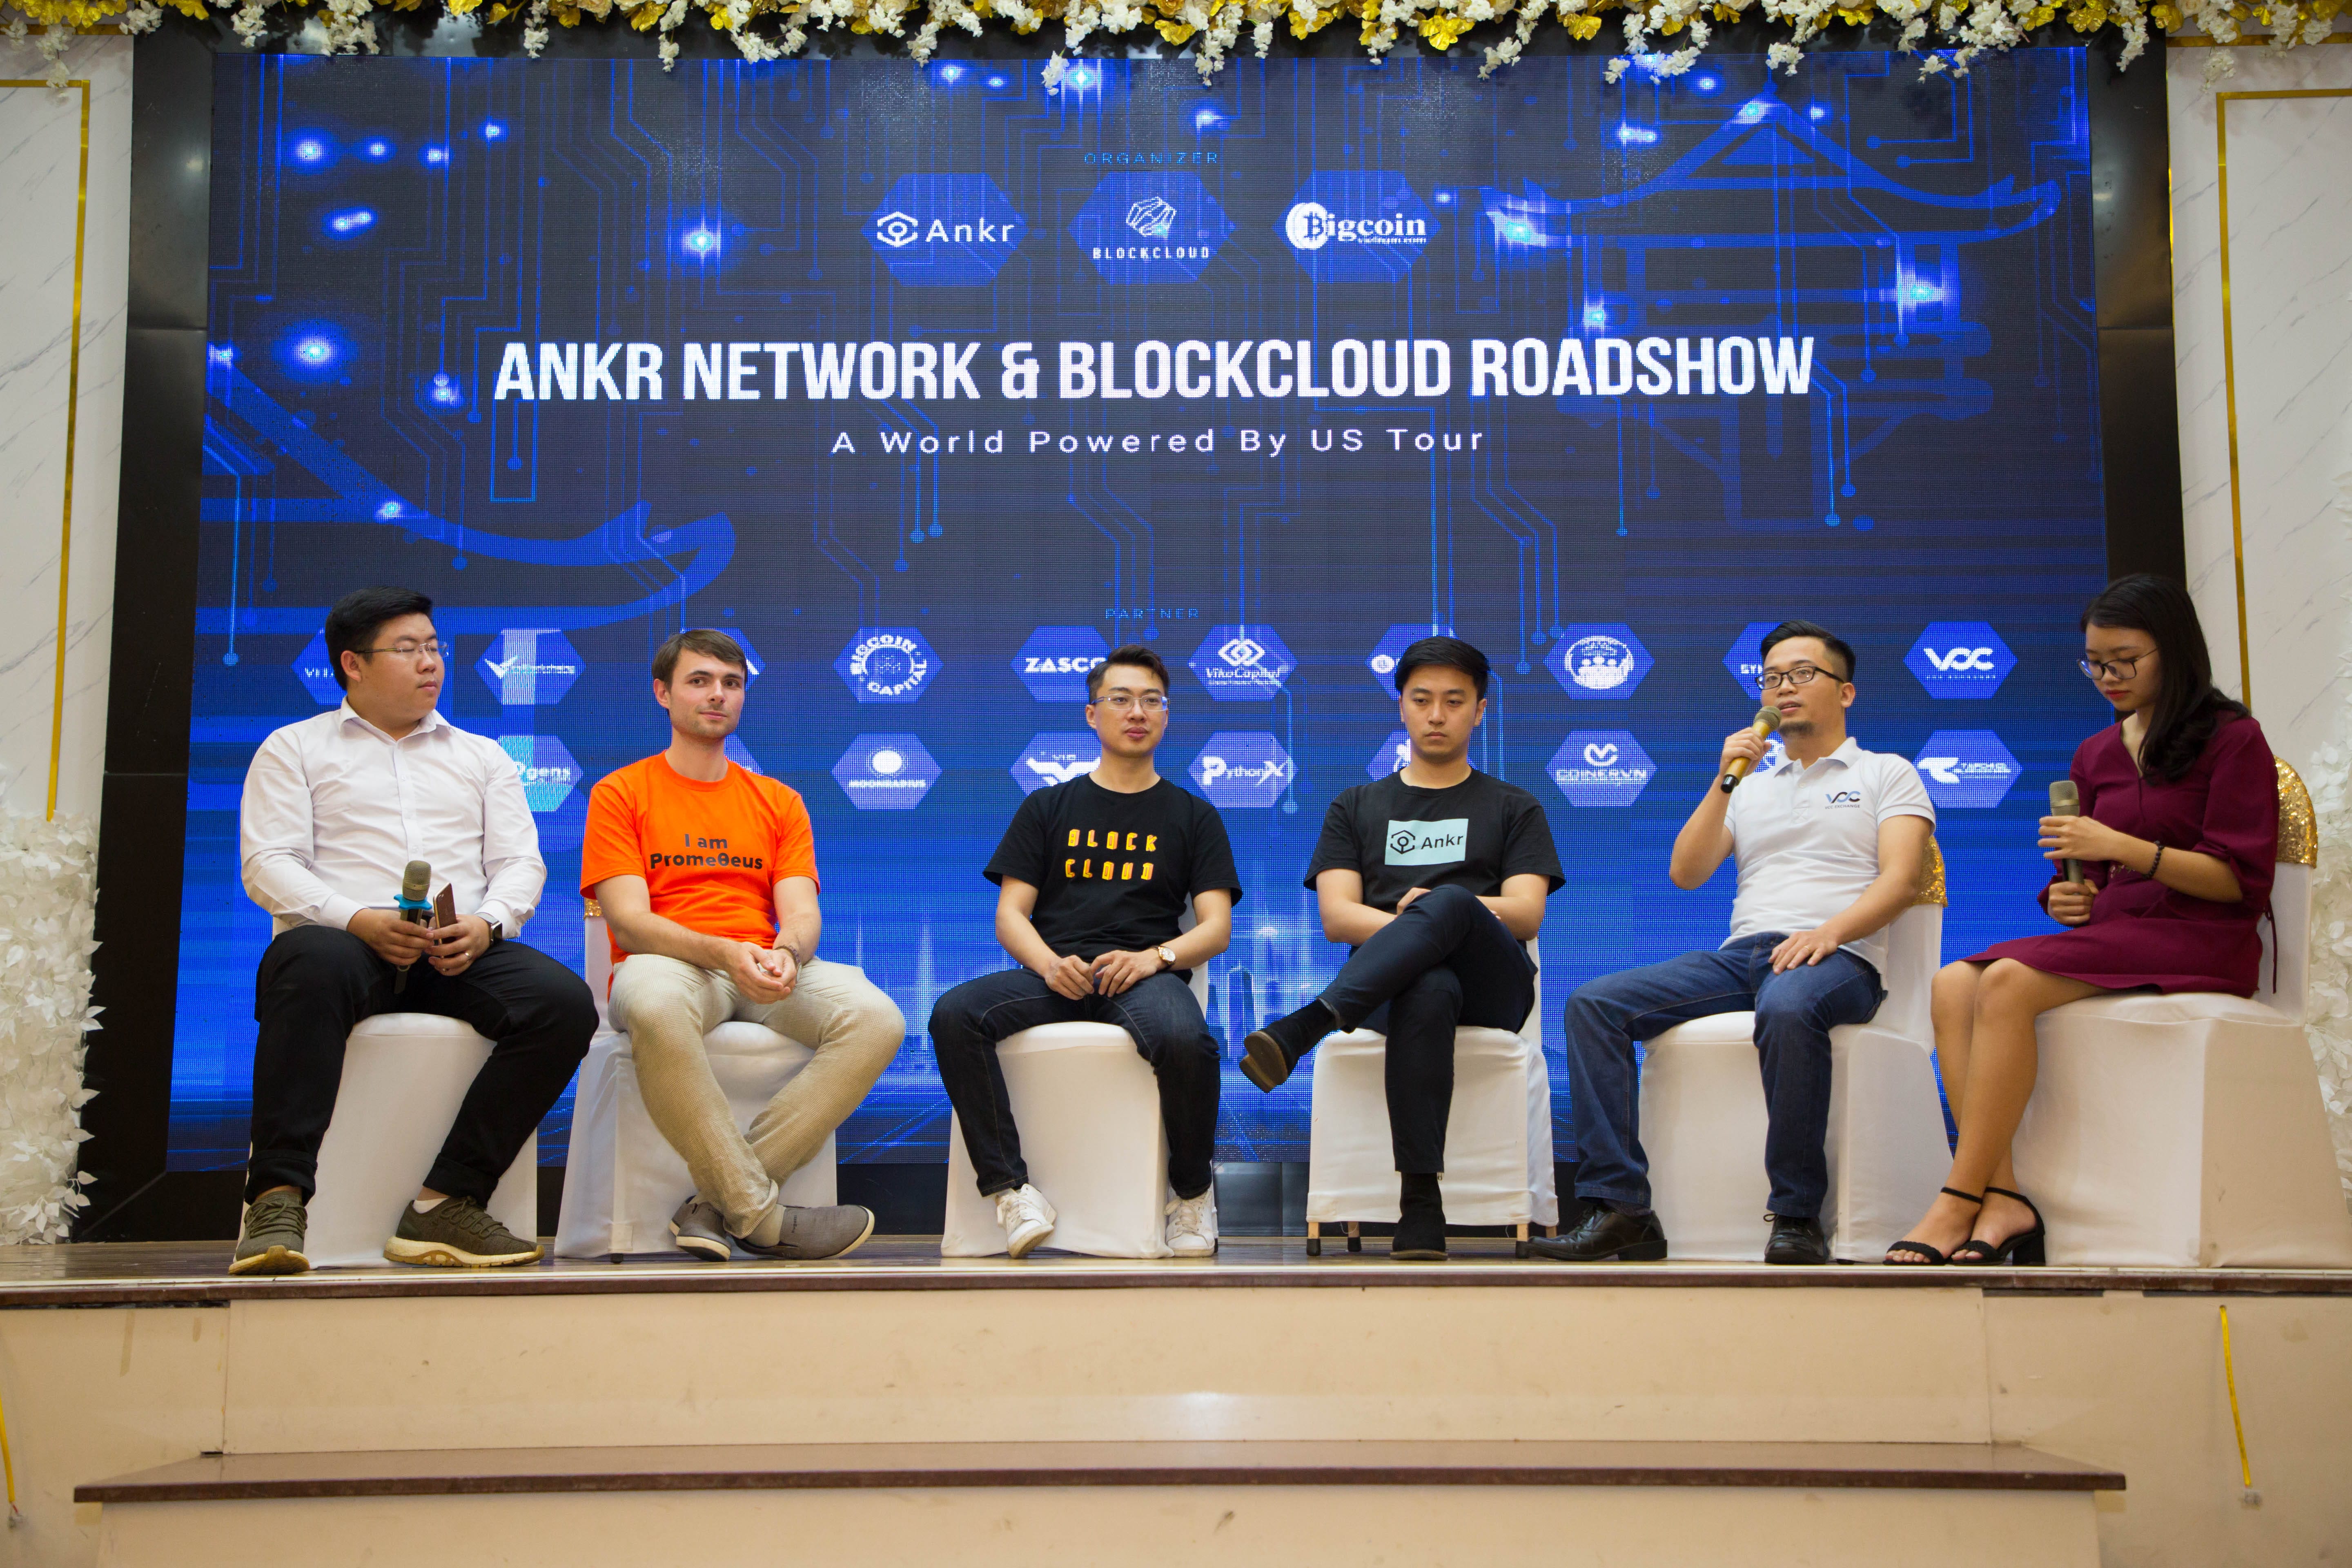 #Ankr Network & Blockcloud Roadshow